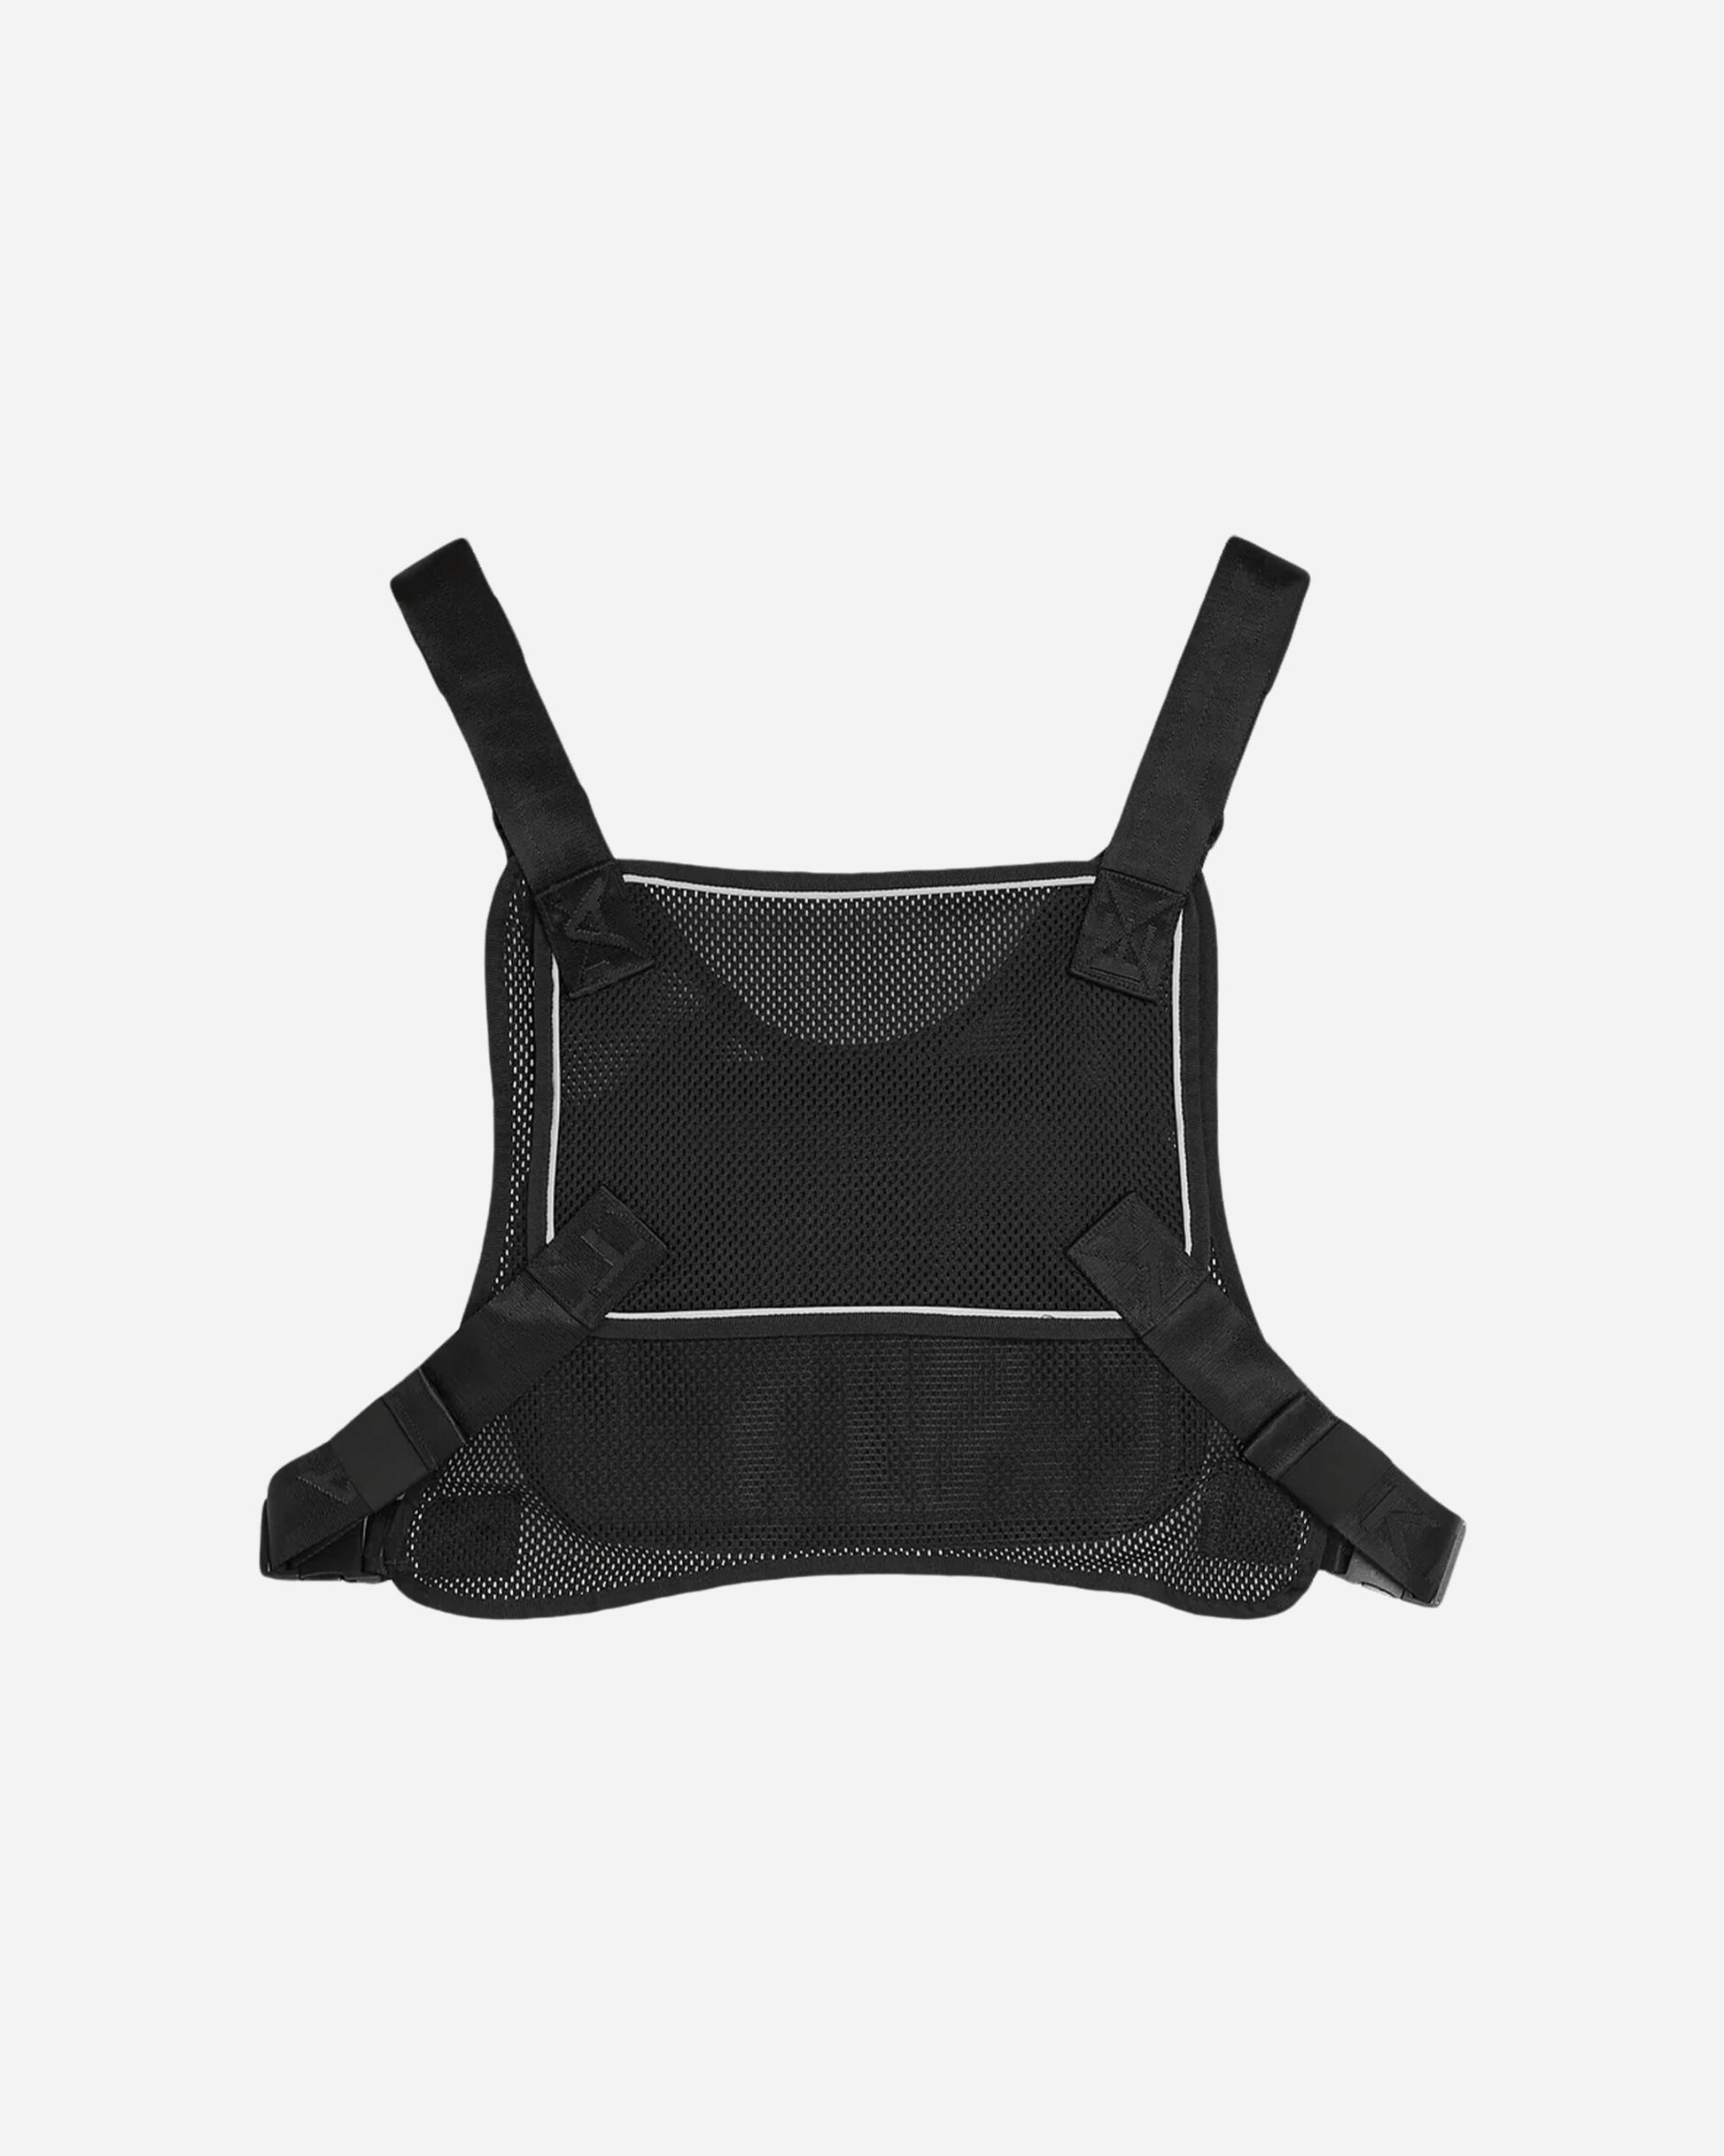 Nike U Nrg Patta Rig Black Bags and Backpacks Waistbags FJ3759-010